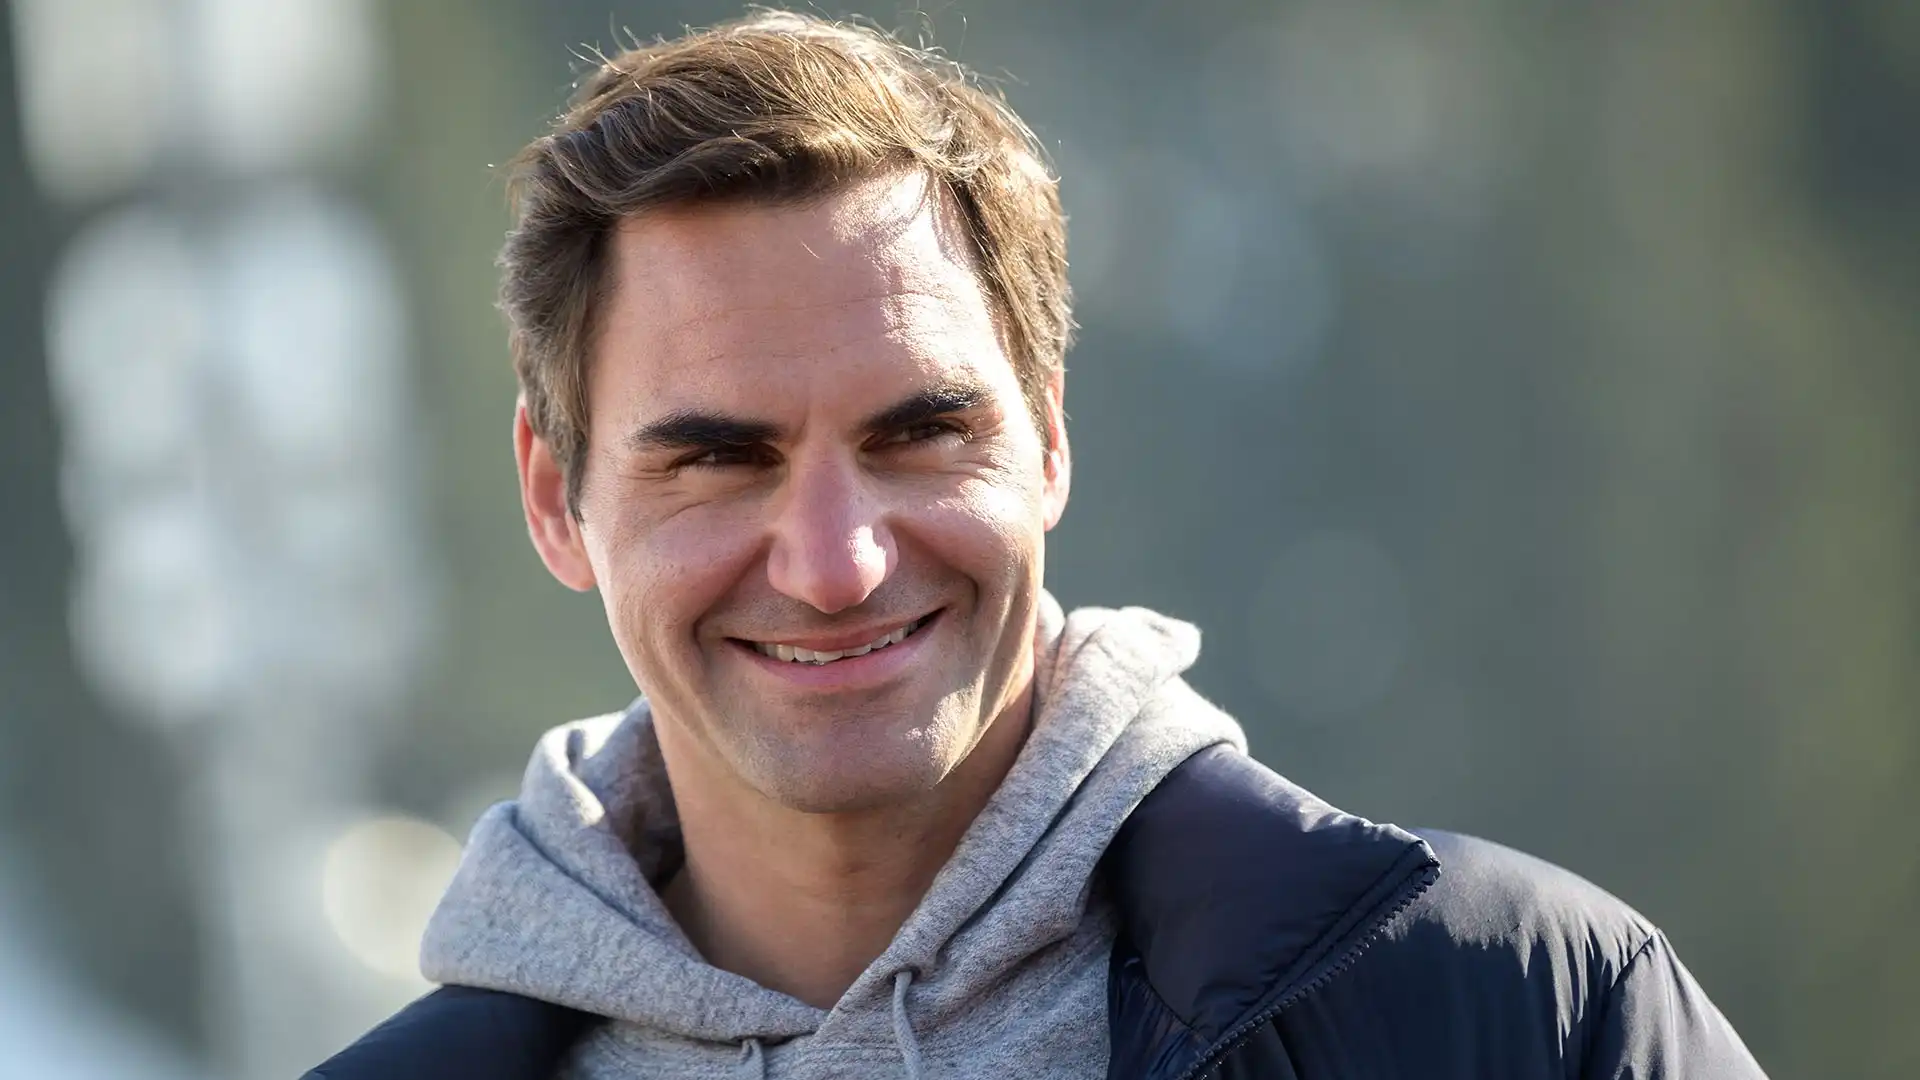 3 Roger Federer (Svizzera): 11,478 ace in 1462 partite totali